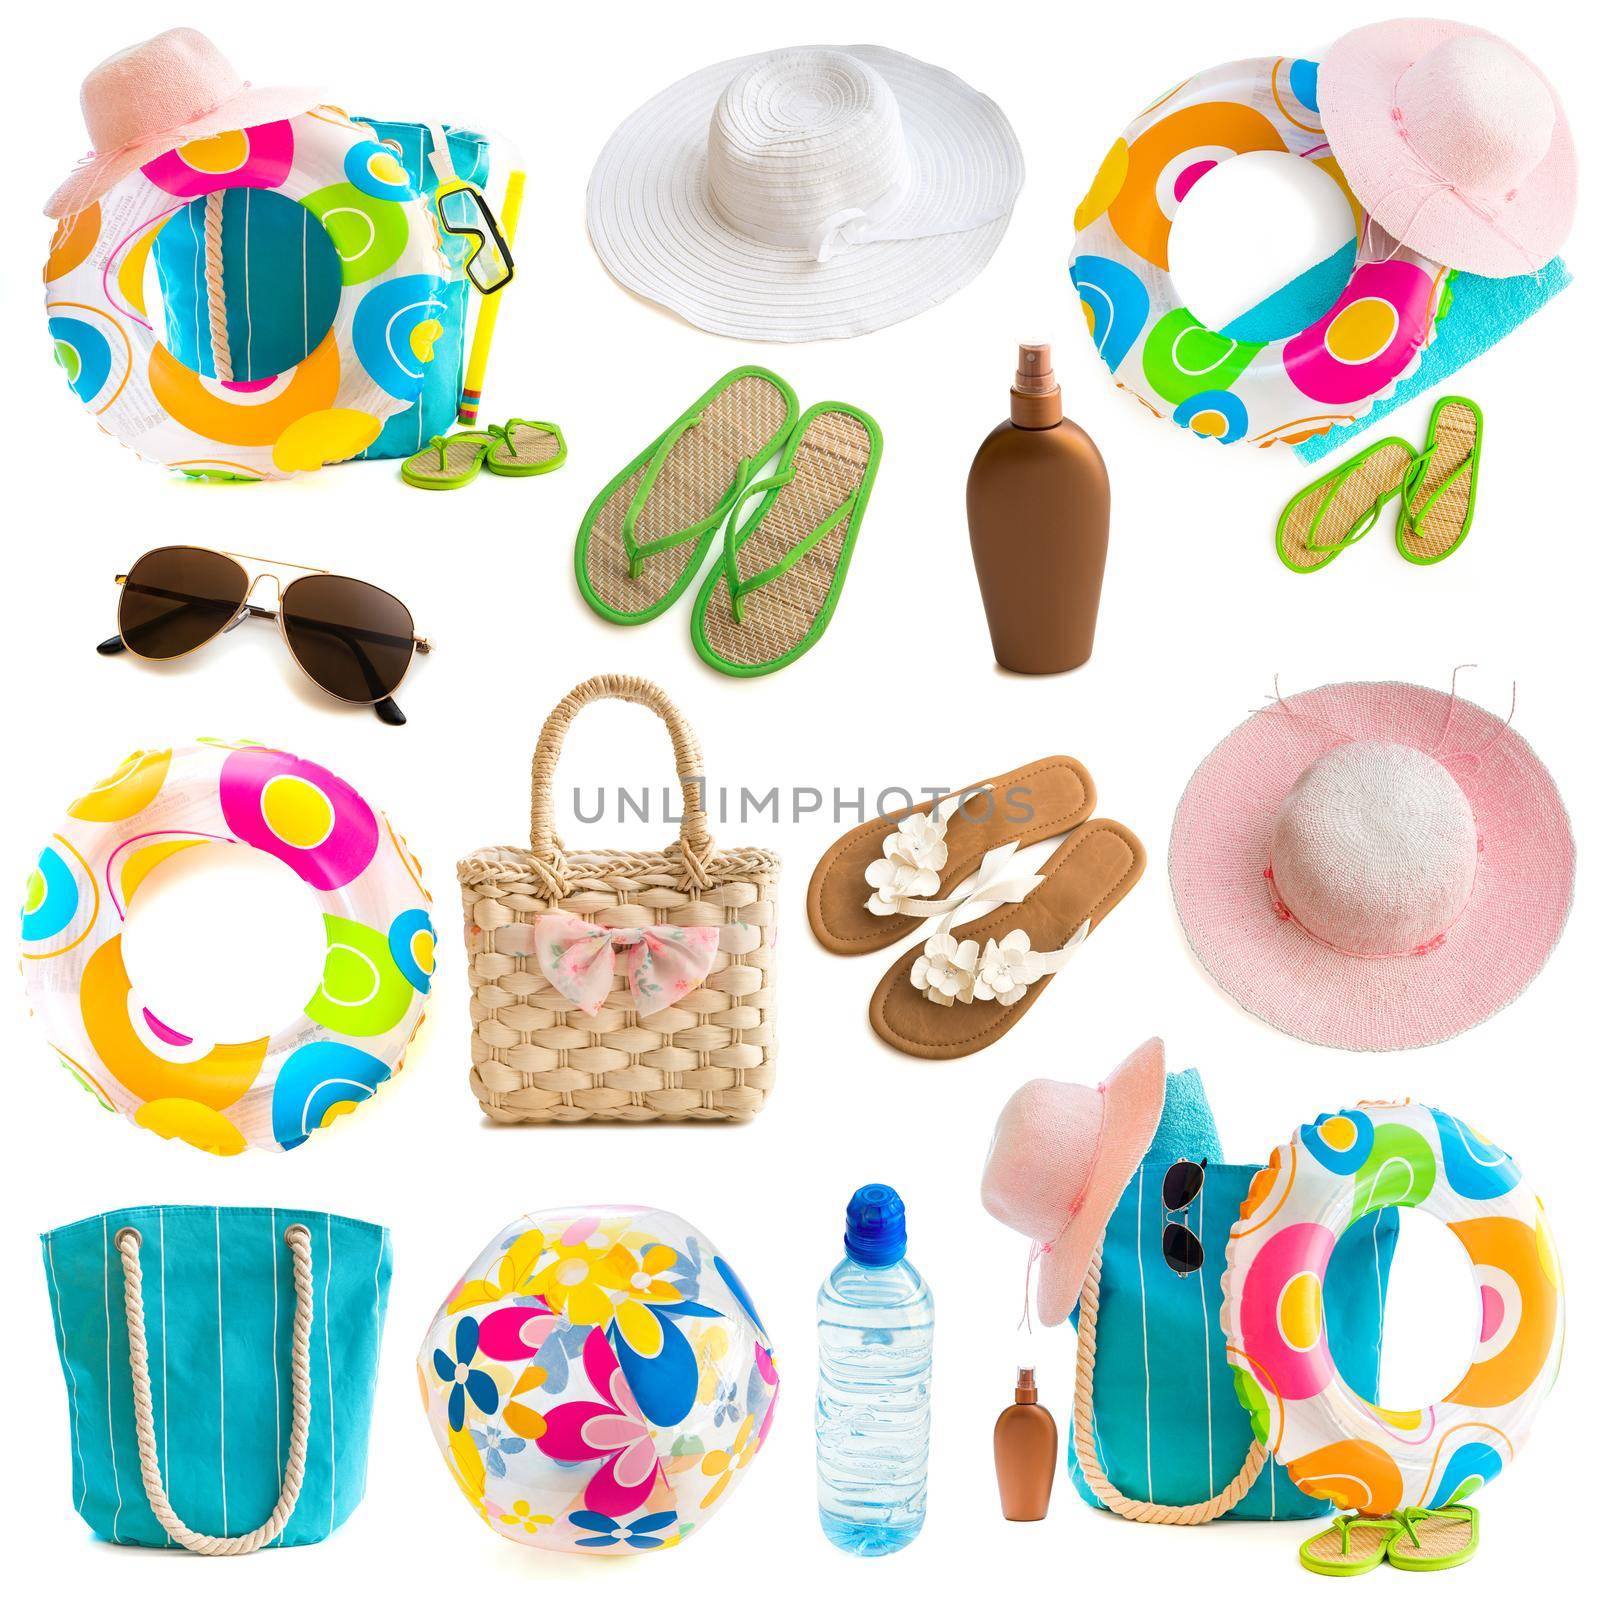 beach accessories by tan4ikk1